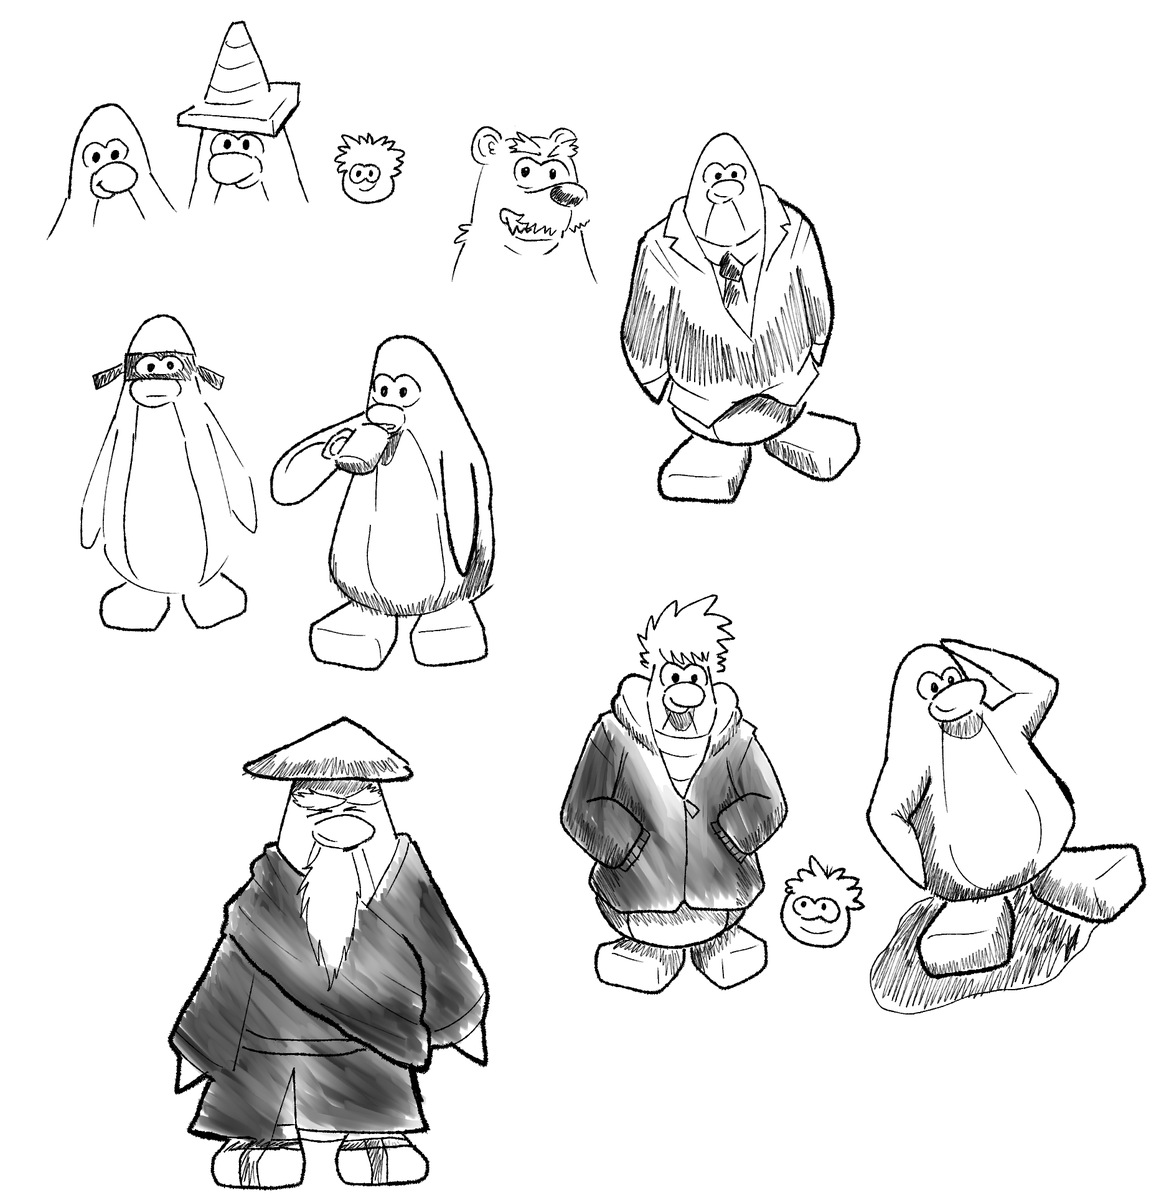 Club Penguin sketches.
#Clubpenguin